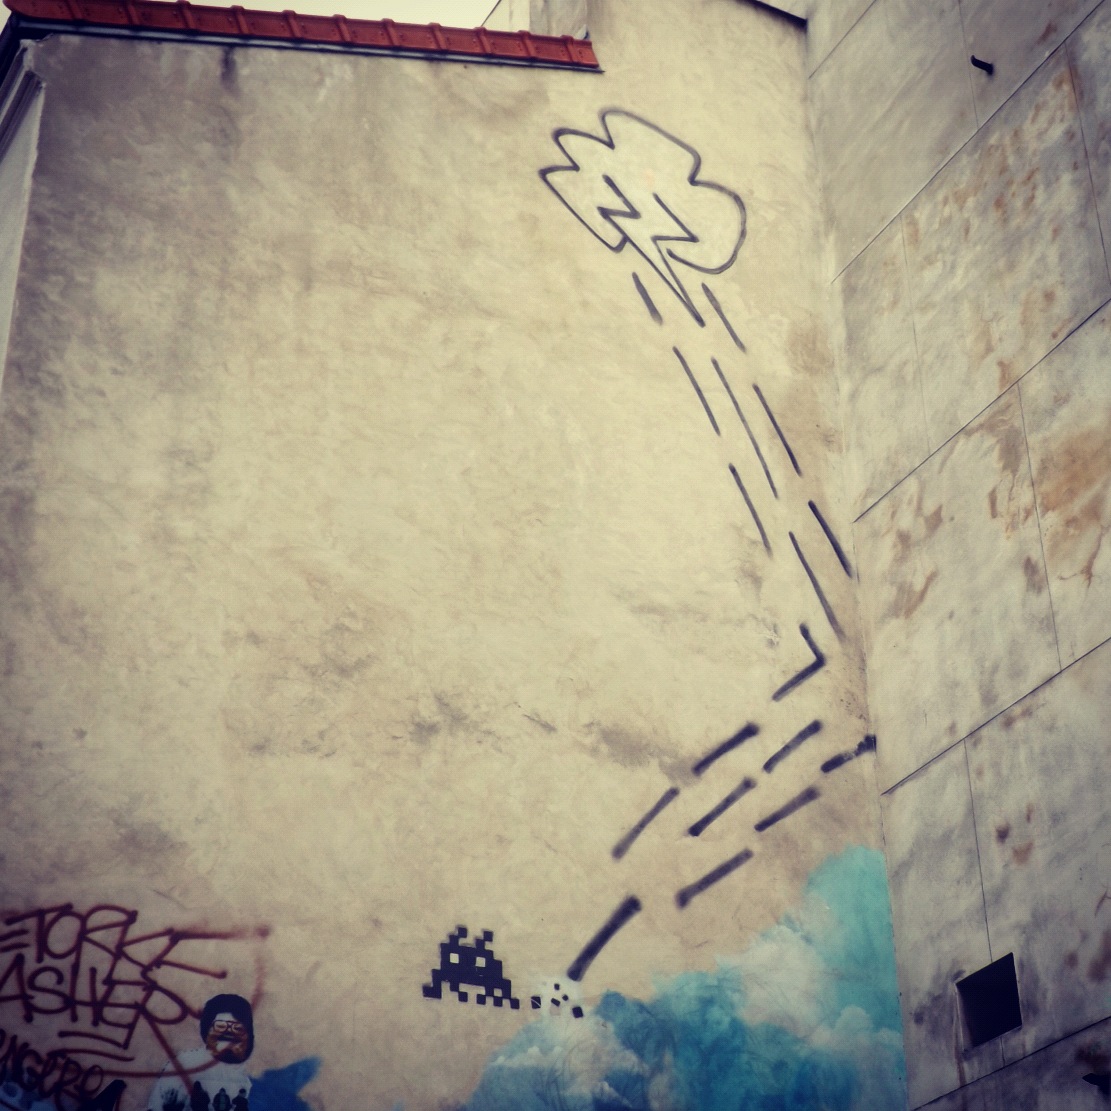 Streetart_Paris_ZEVS_Invader